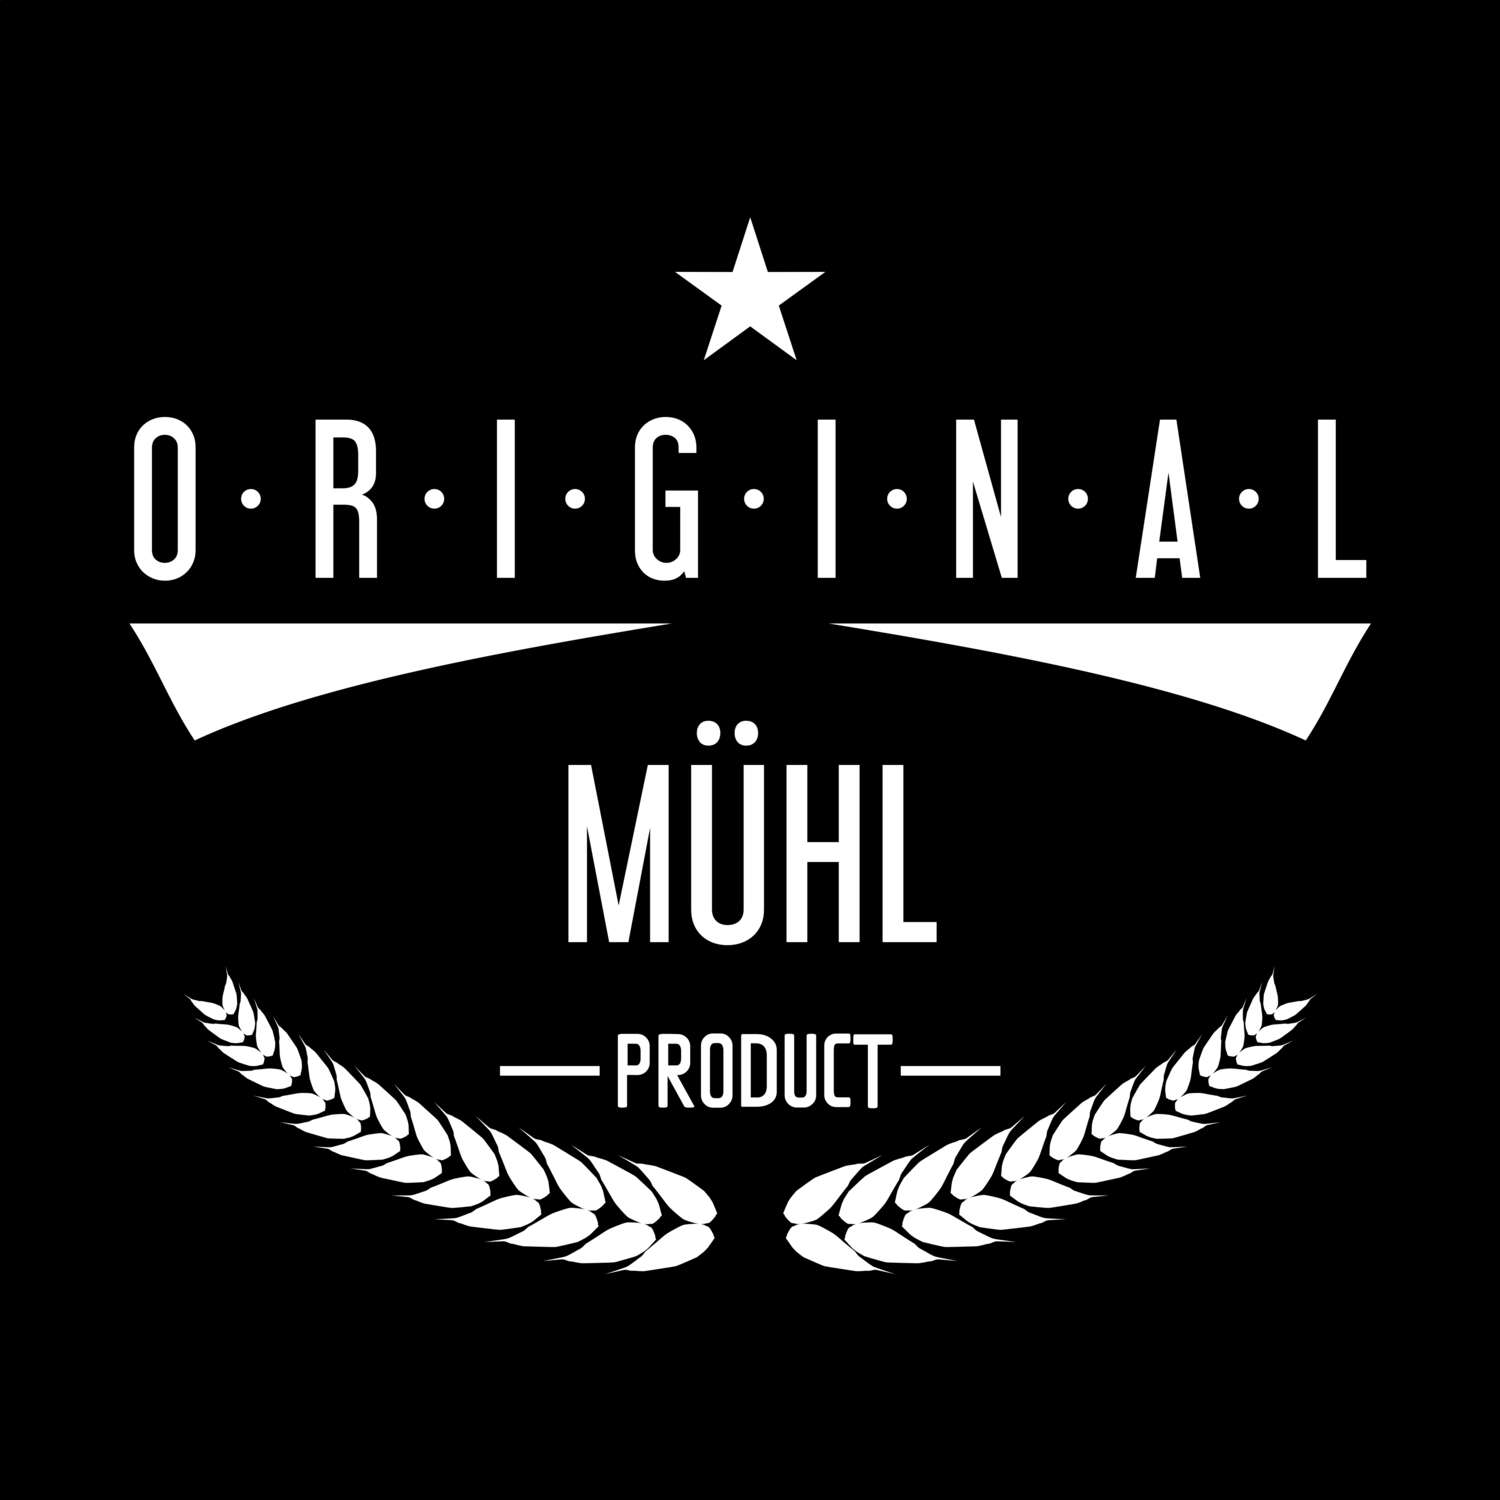 Mühl T-Shirt »Original Product«